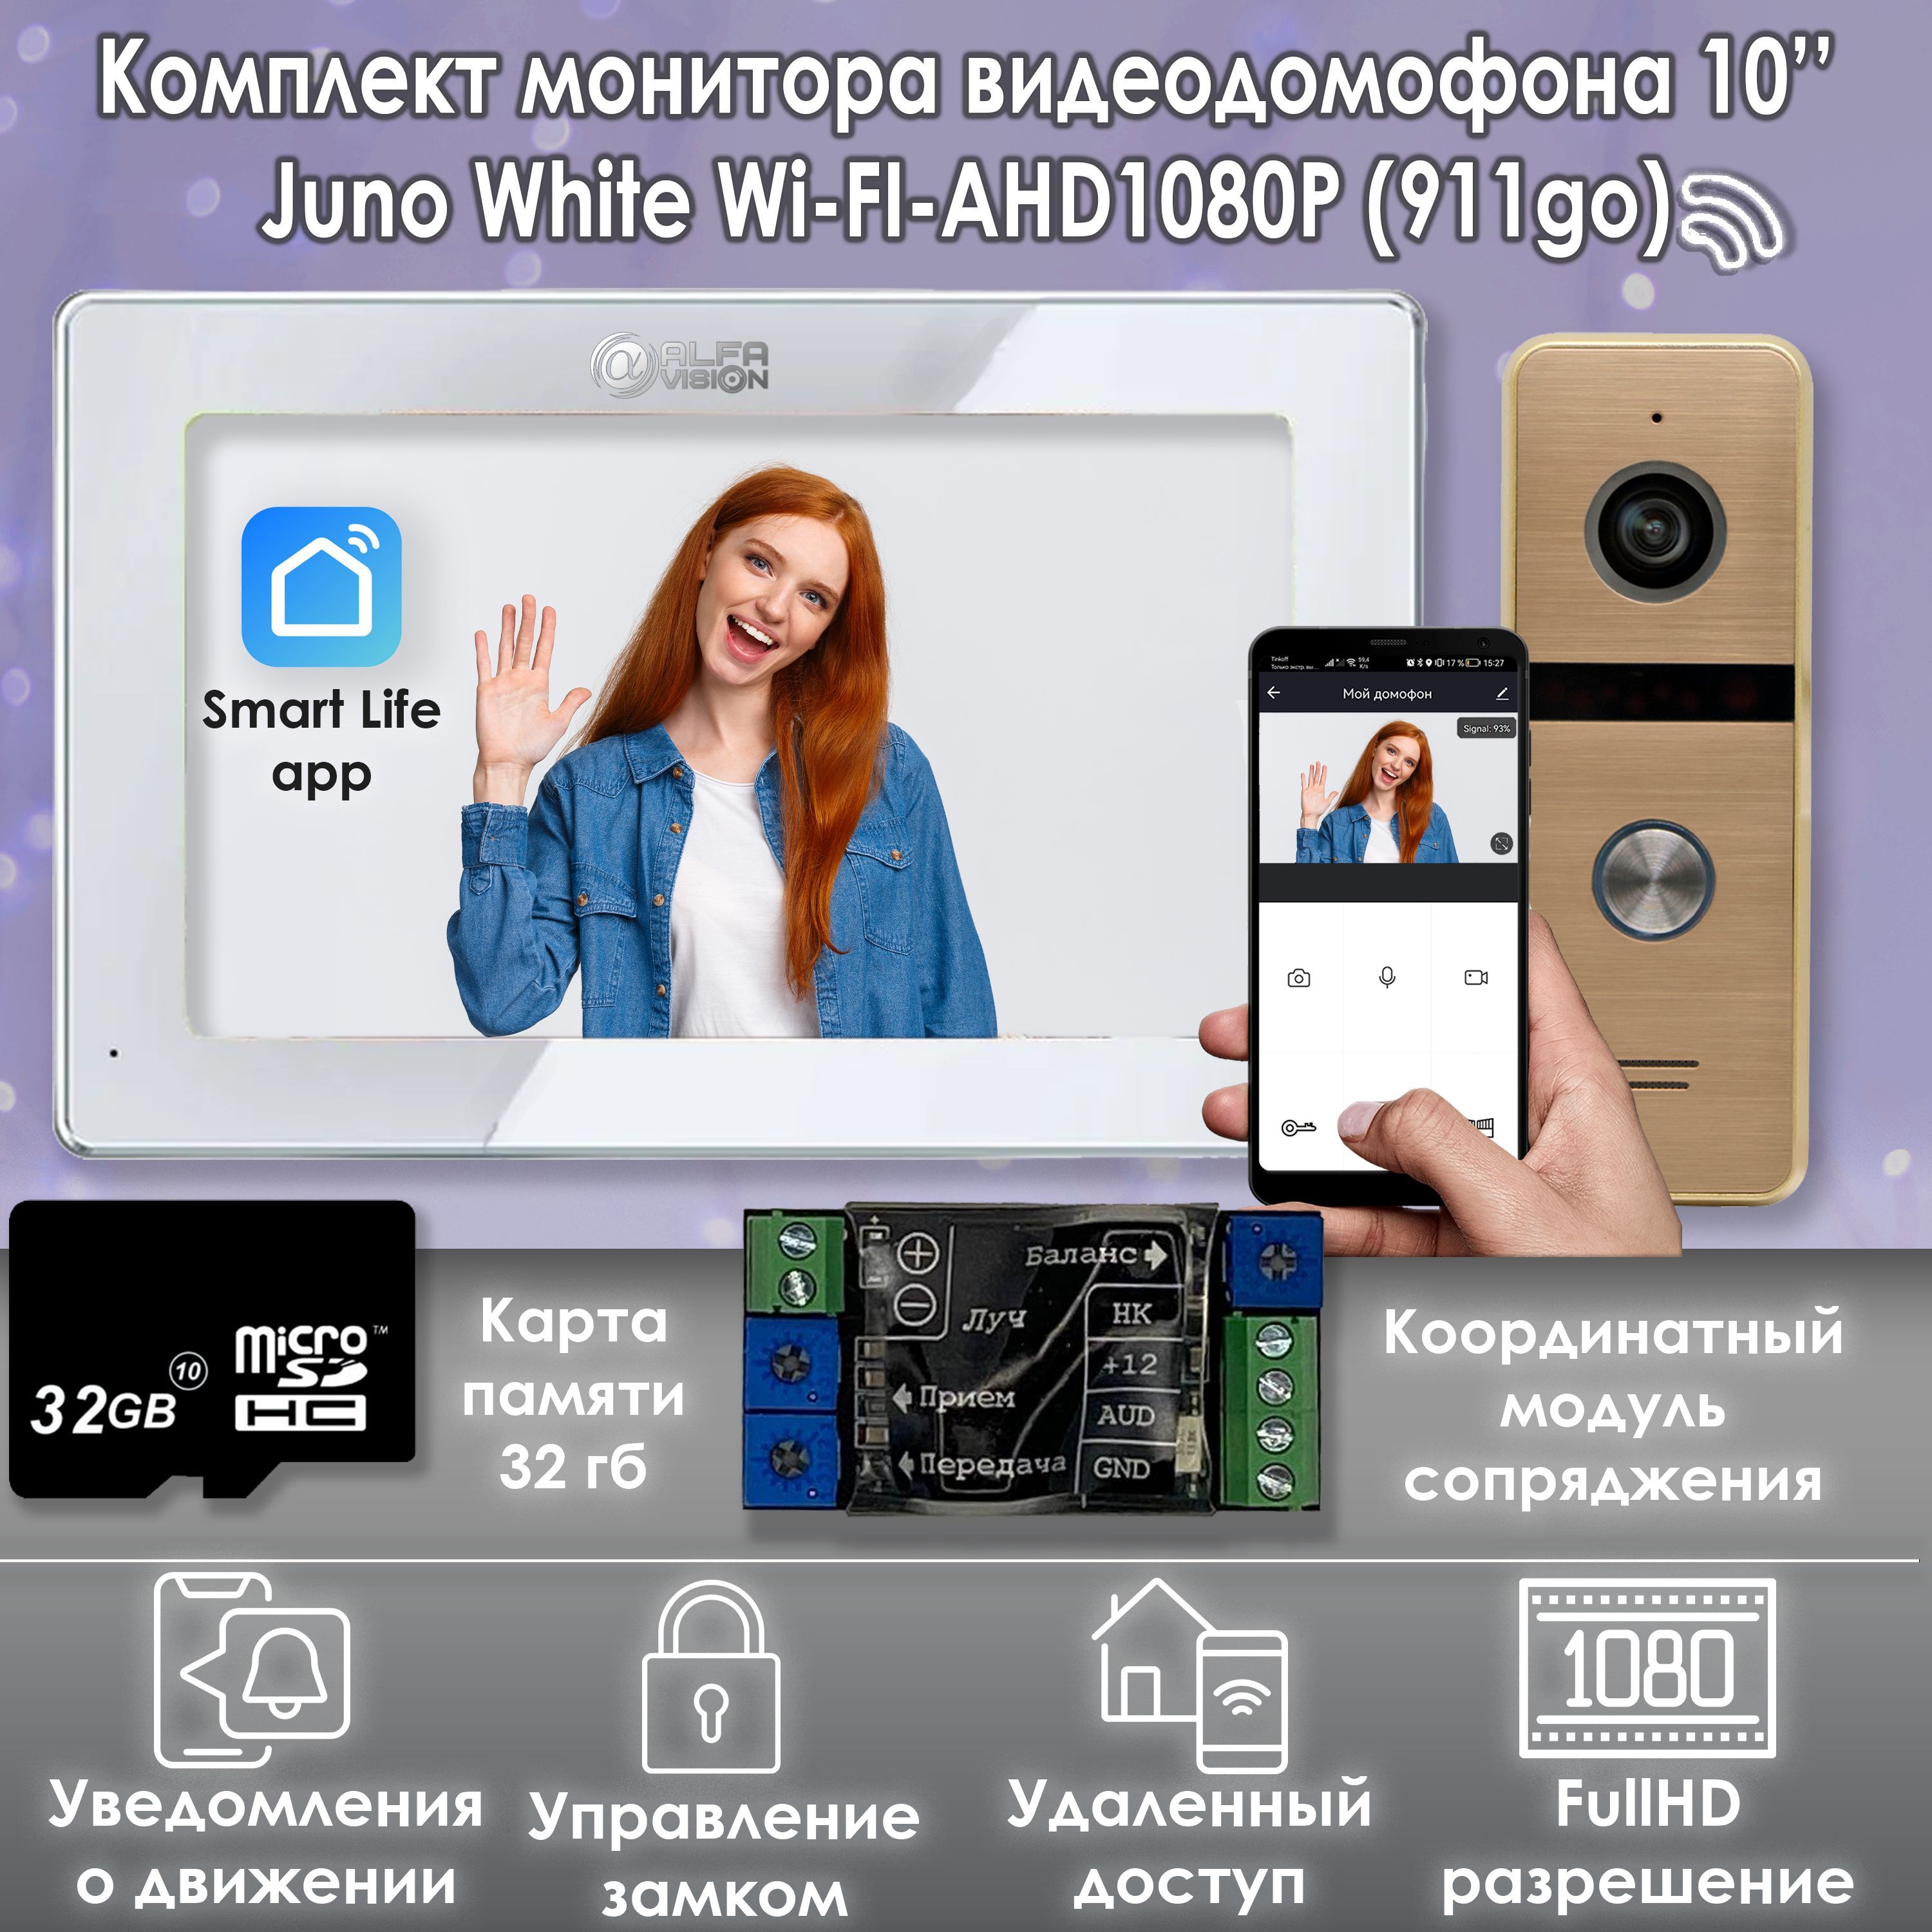 Комплект видеодомофона Alfavision Juno White-KIT Wi-Fi (911GO) + Модуль сопряжения